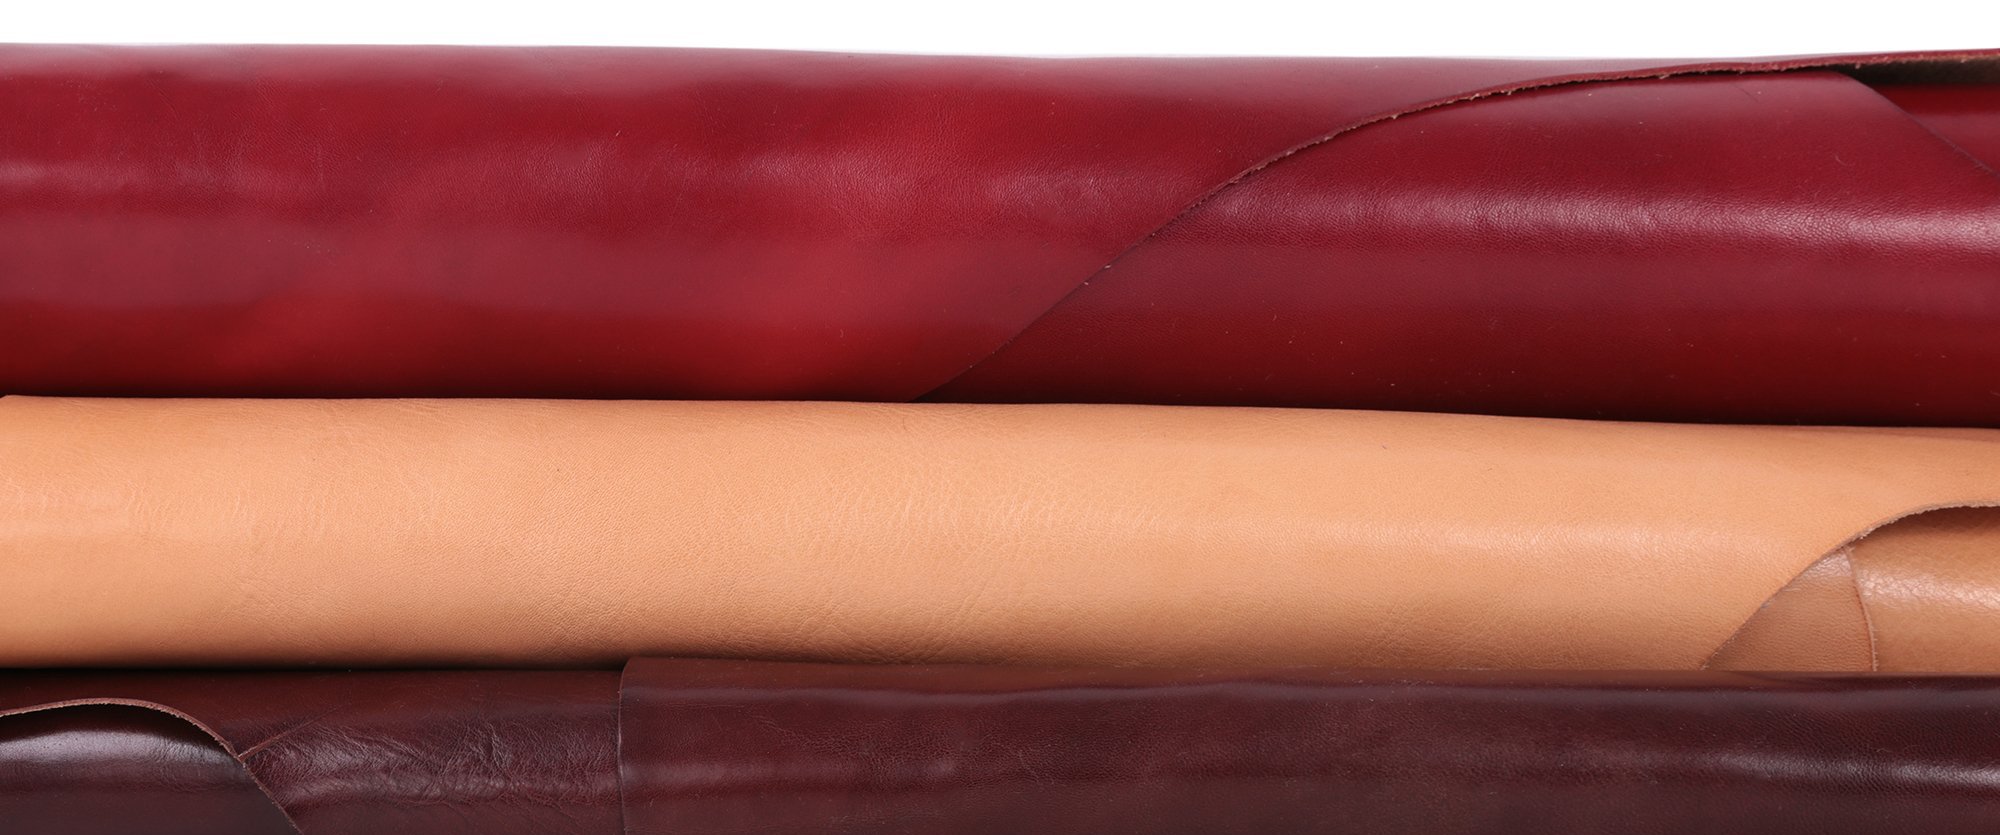 LUCRIN Geneva Work Messenger Bag - LV - Fuchsia - Granulated Calf Leather